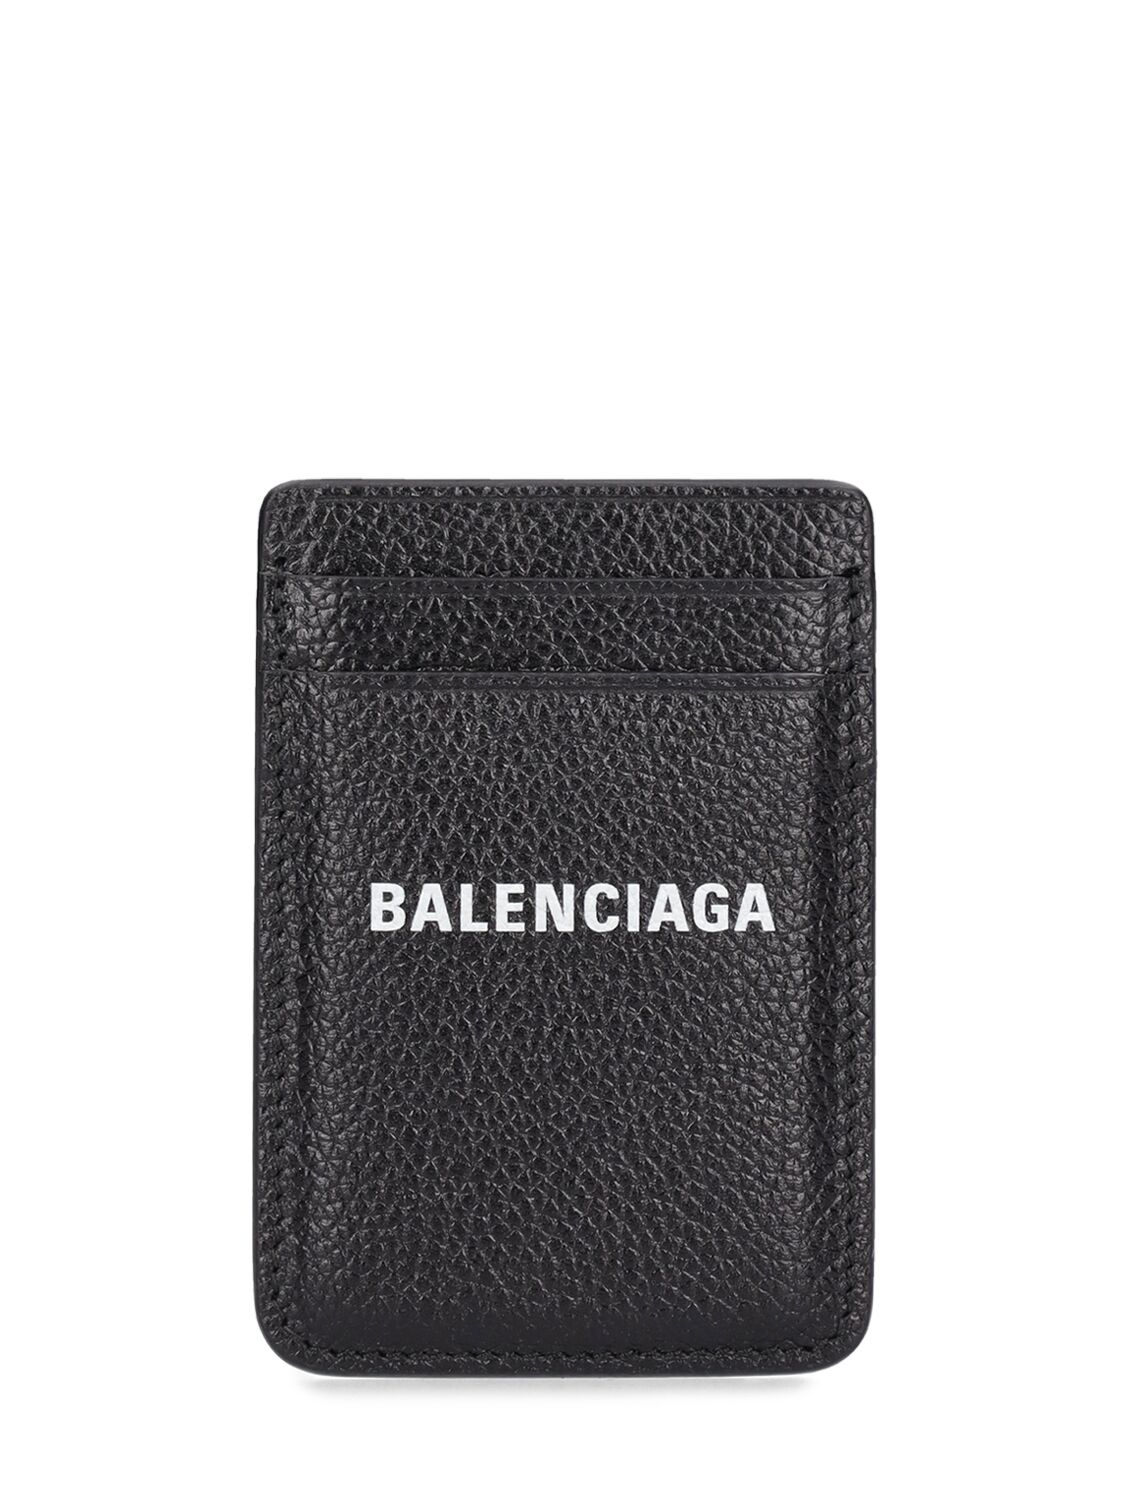 Balenciaga Magnet Card Holder In Black